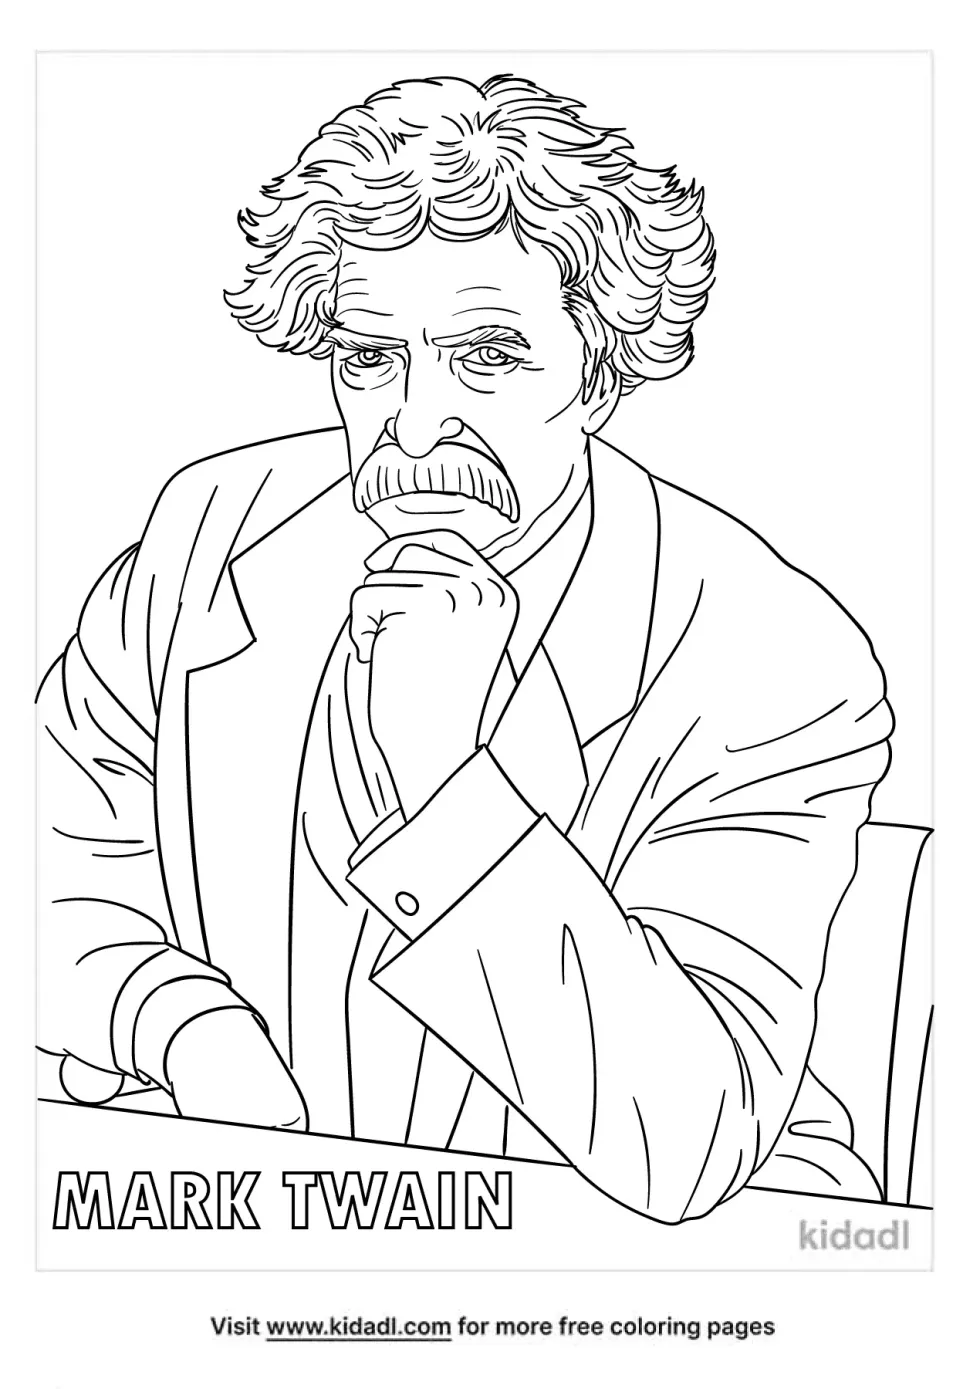 Mark Twain Coloring Page